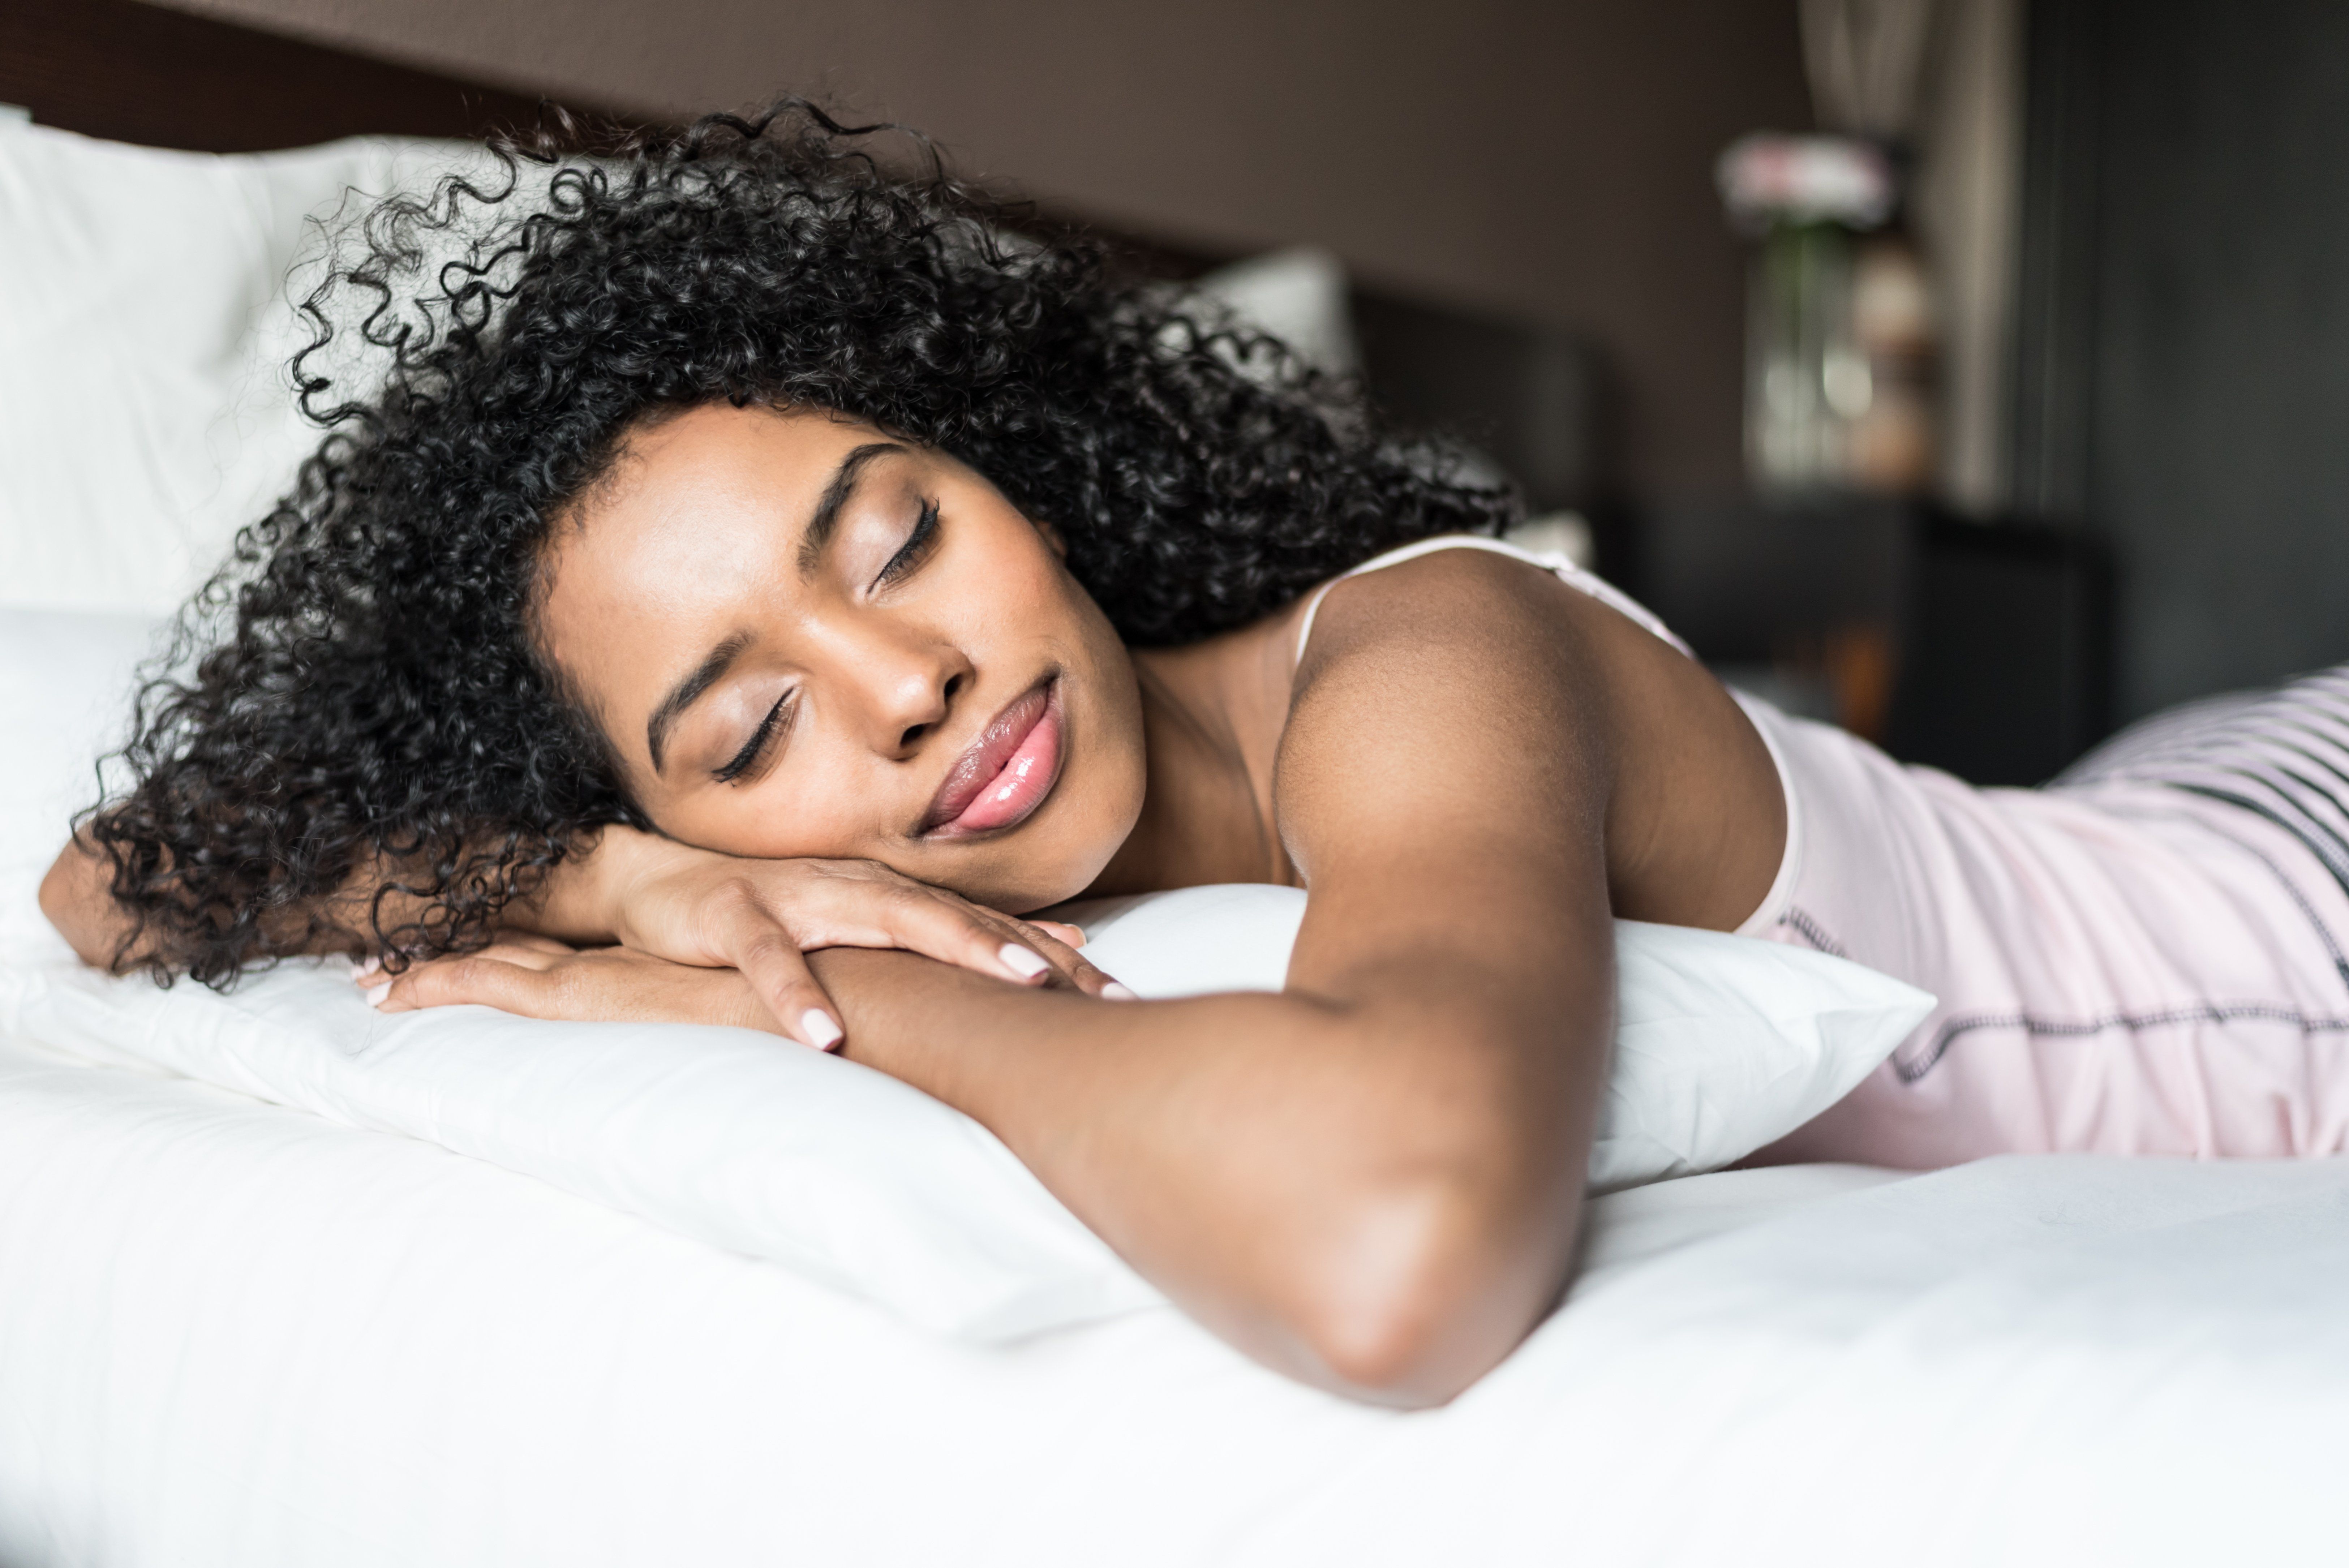 How Does Sleep Impact Eye Health?